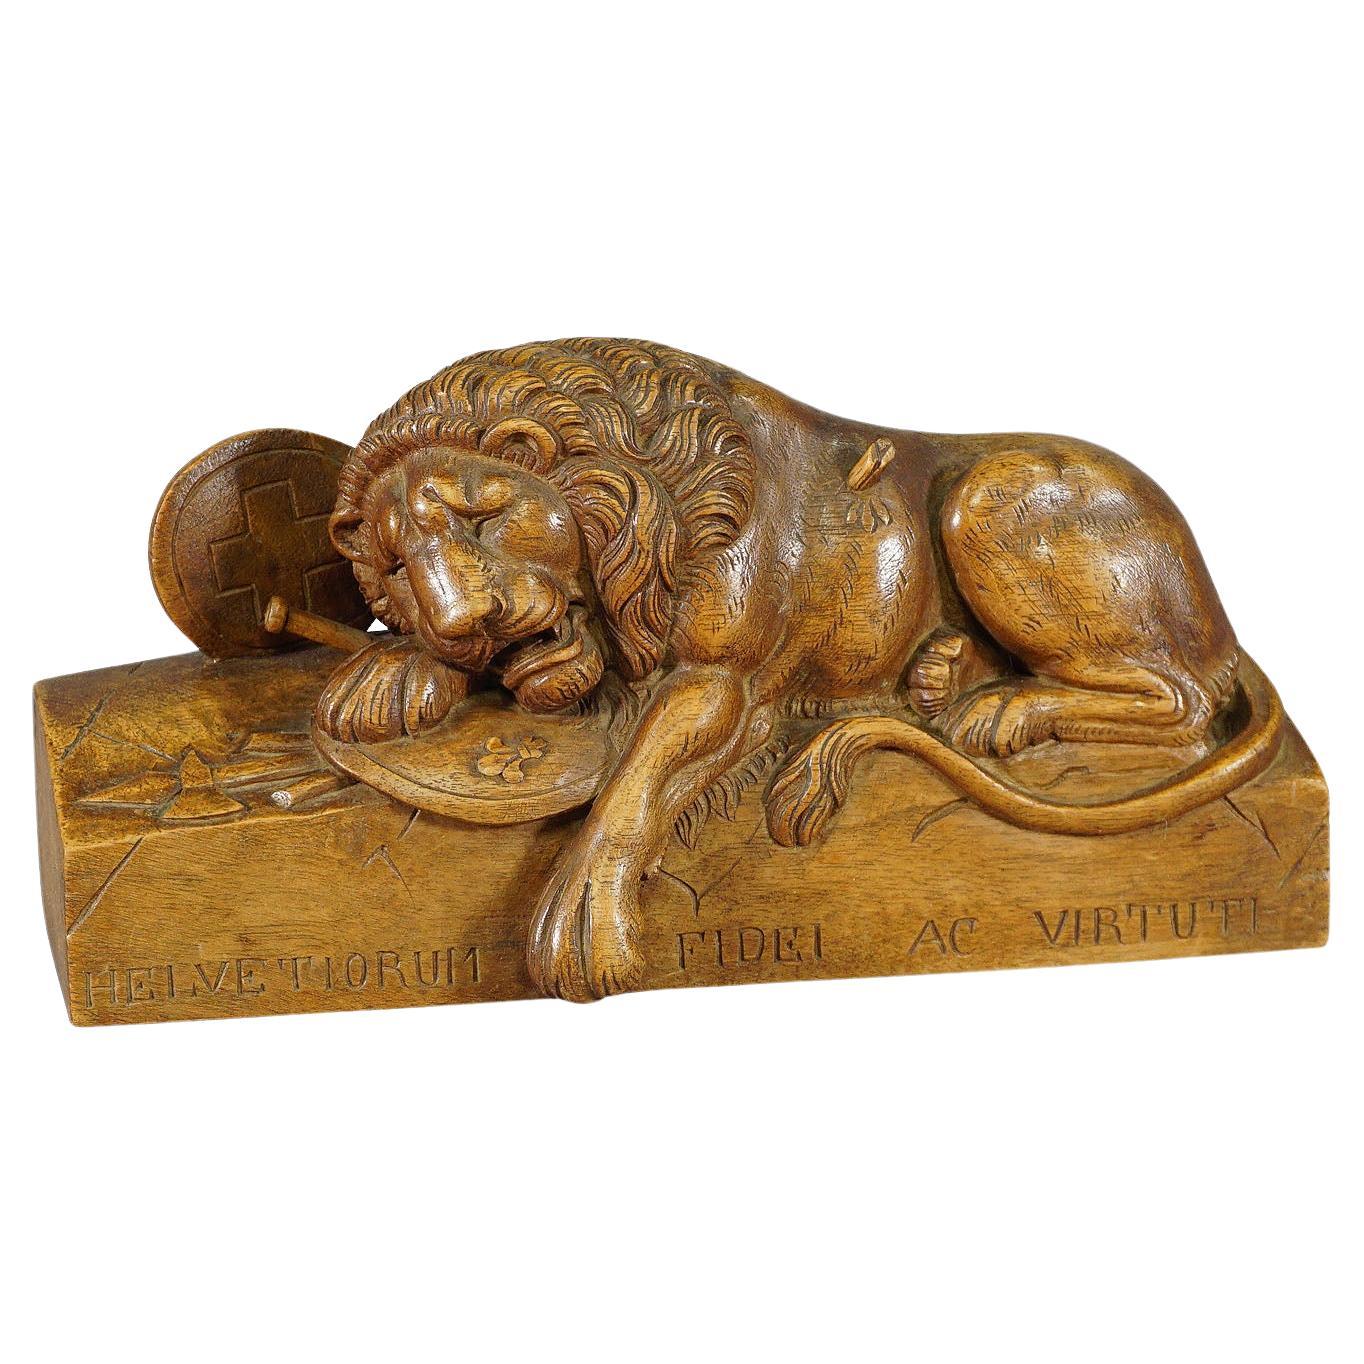 Antique Wooden Sculpture of the Lion of Lucerne, Brienz ca. 1900